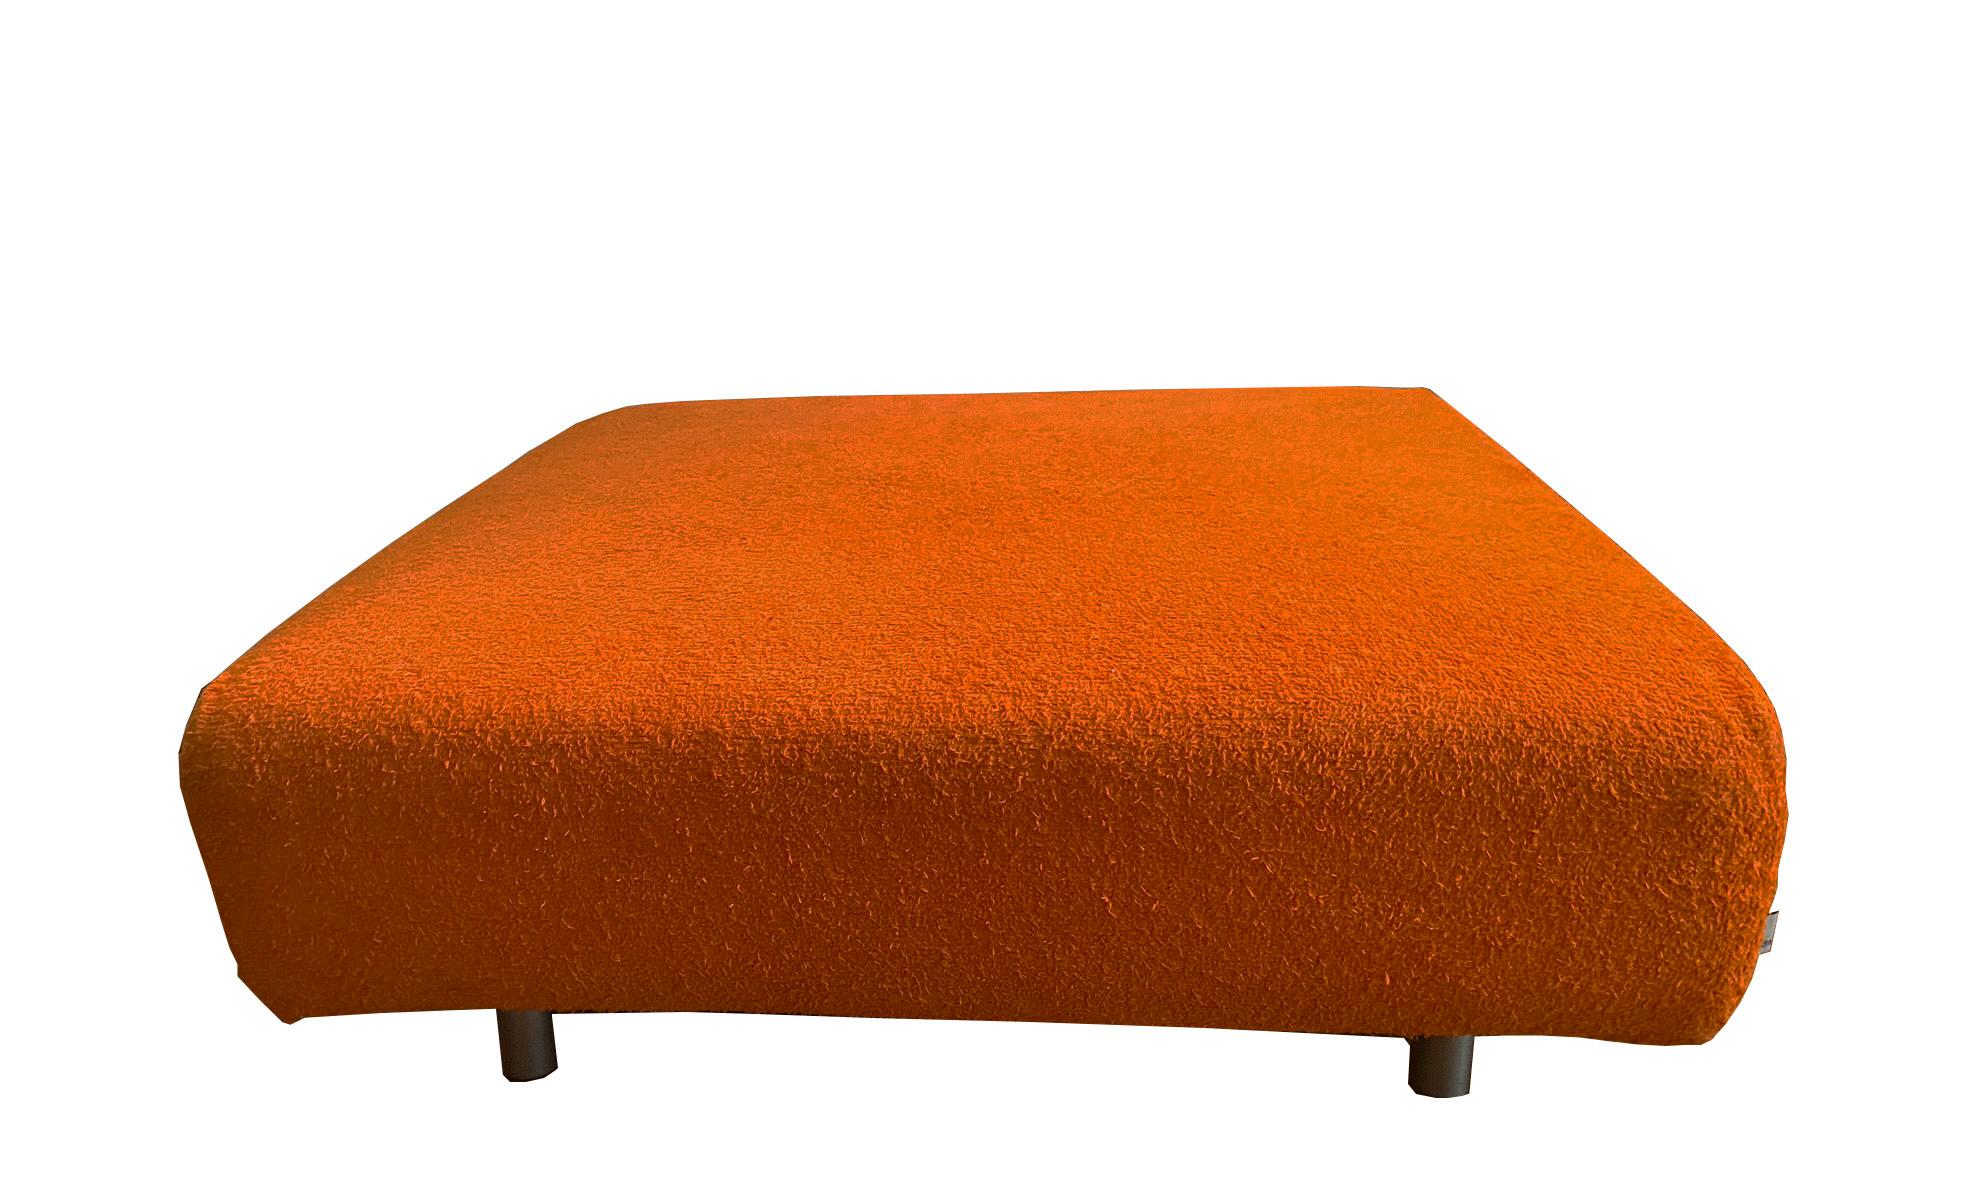 Sitz/Pouf in original Edra orangefarbenem Stoff, original Label.